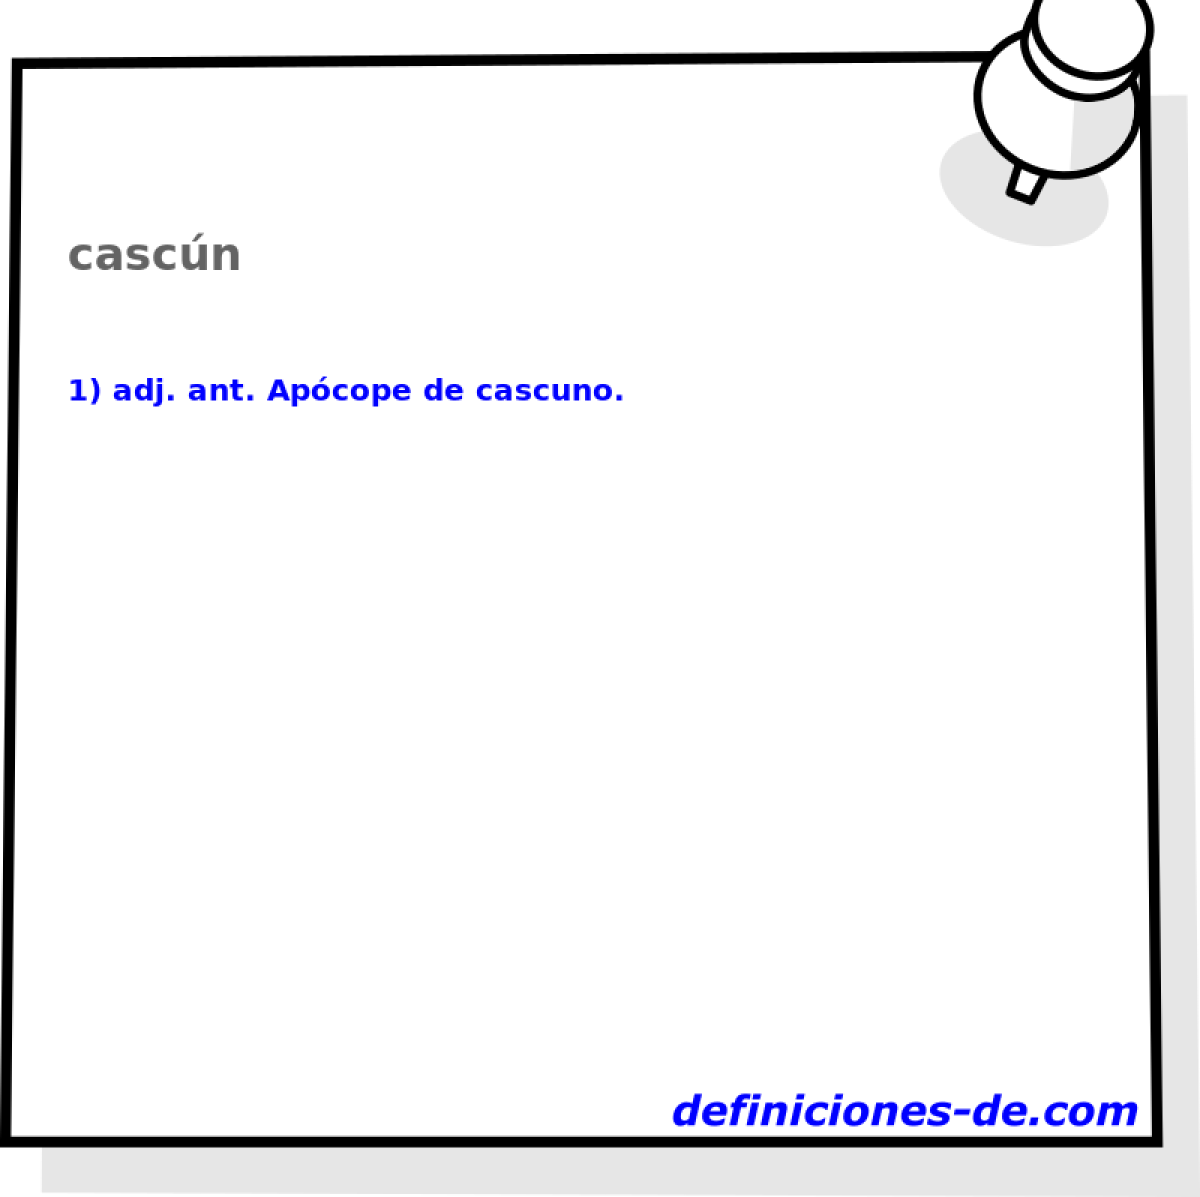 cascn 